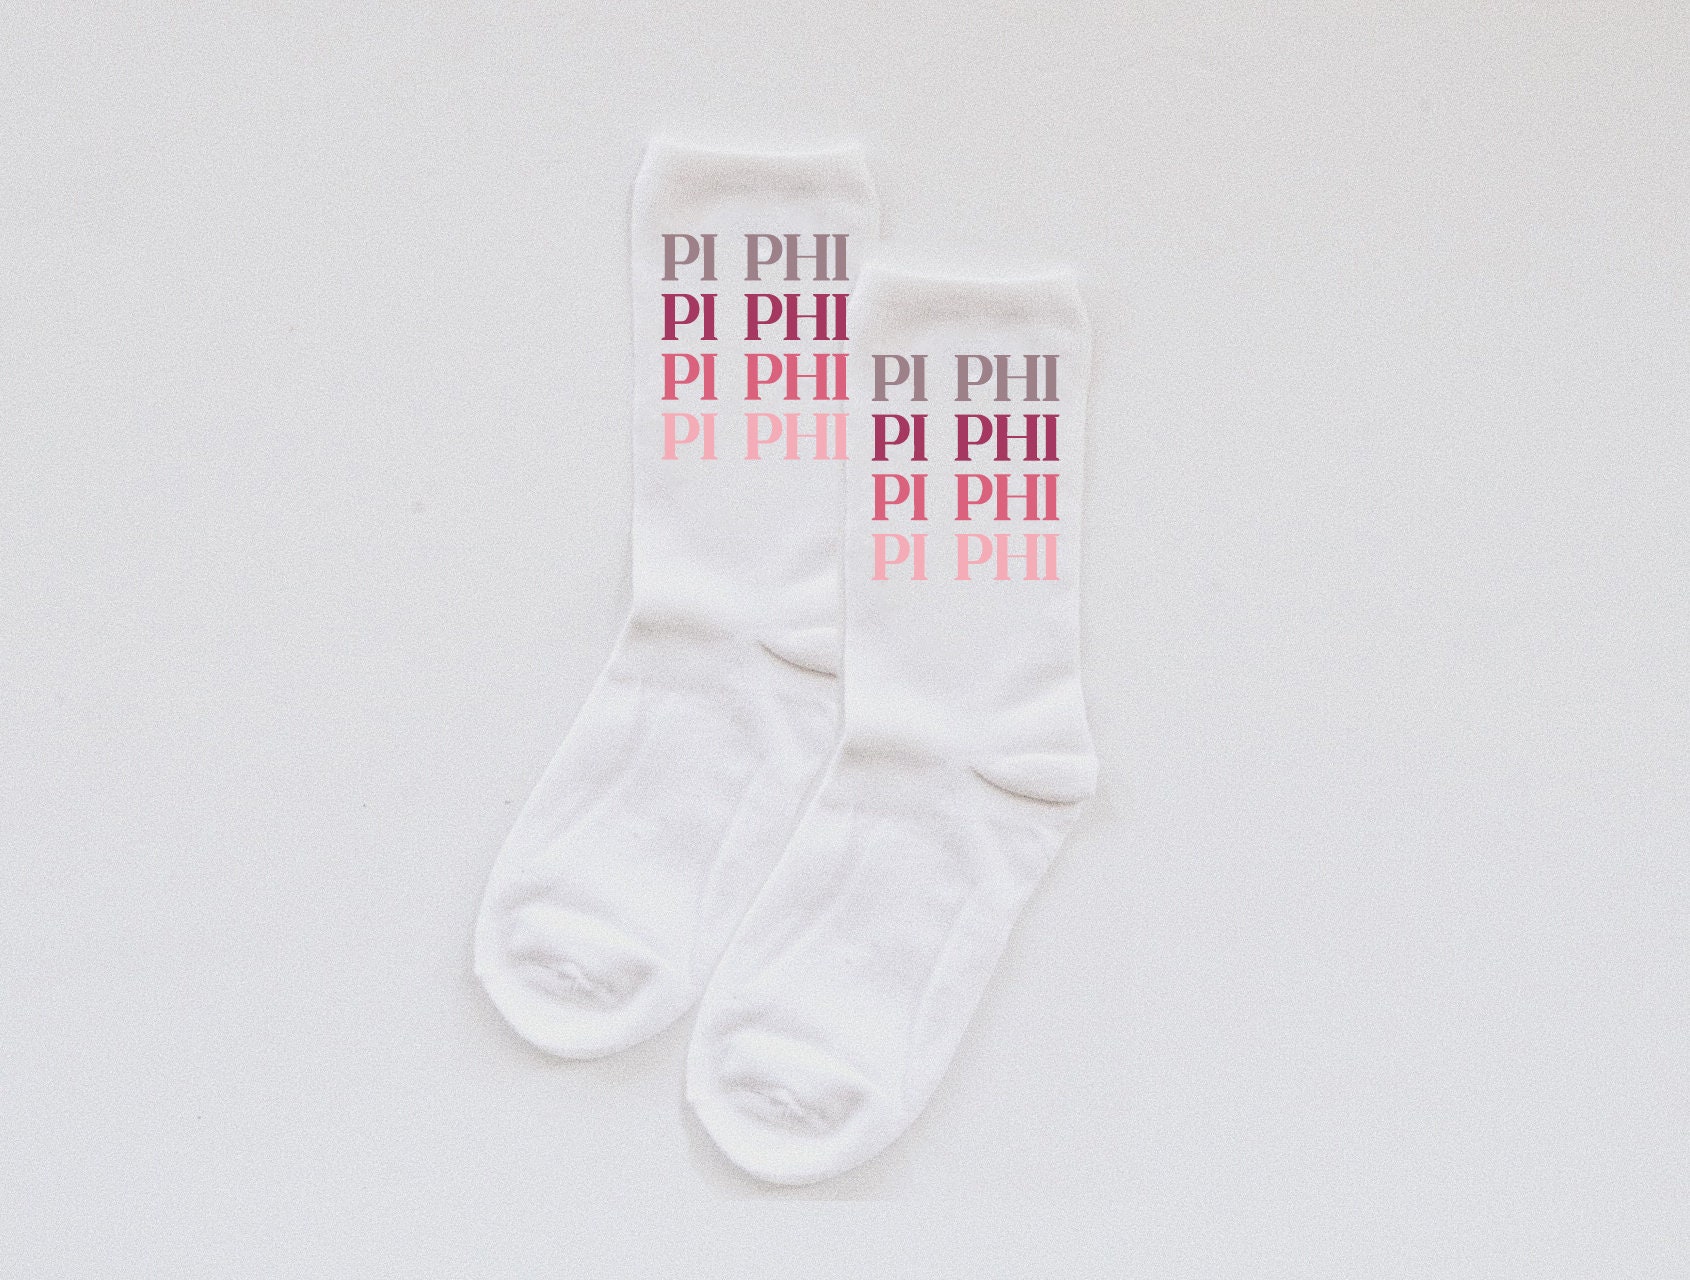 Pi Beta Phi Socks pi phi shirts bid day custom socks recruitment pi phi shirts sorority gifts sorority socks sorority rush Pi phi